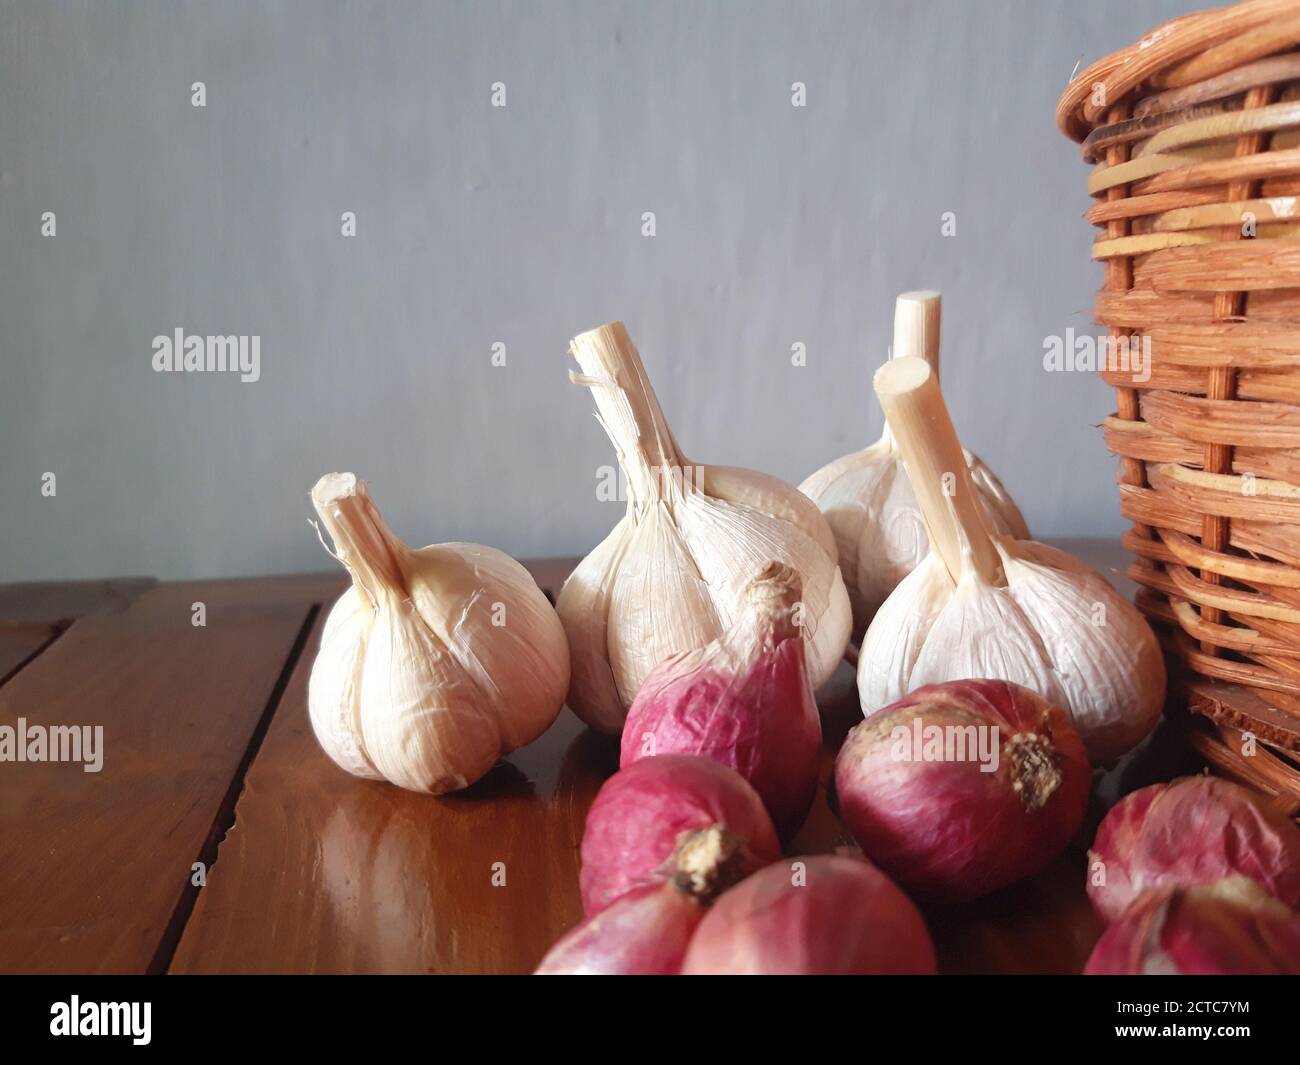 Ripe and raw organic onion and garlic on wooden background, alternative medicine, organic cleaners. Onions and garlics background Stock Photo